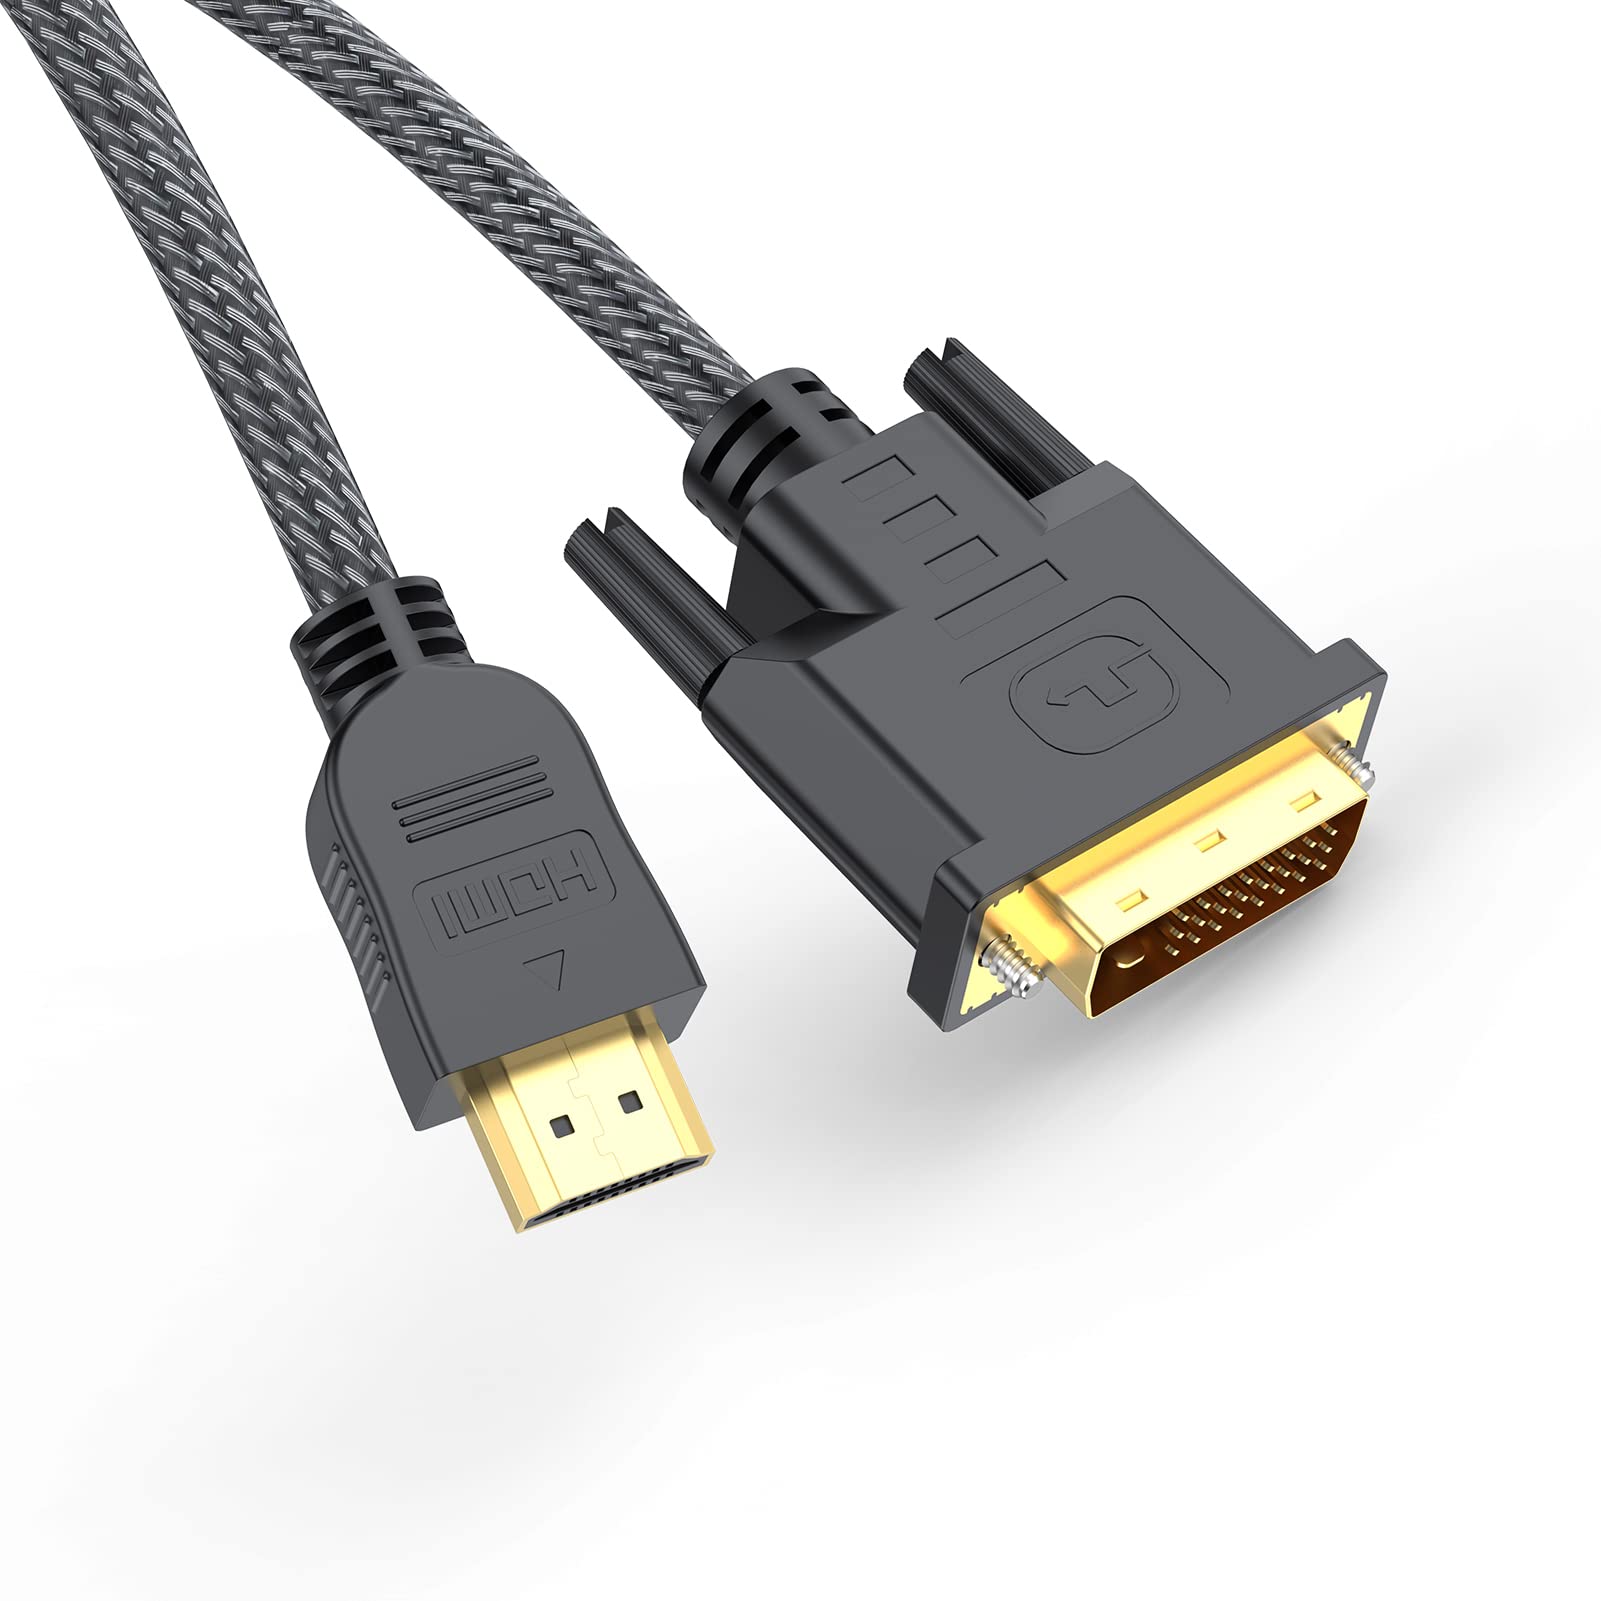 UOOI HDMI to DVI cable 10FT, Bidirectional HDMI to DVI-D(24+1) or DVI to HDMI Male to Male Adapter cable 10 Bi-Directional co